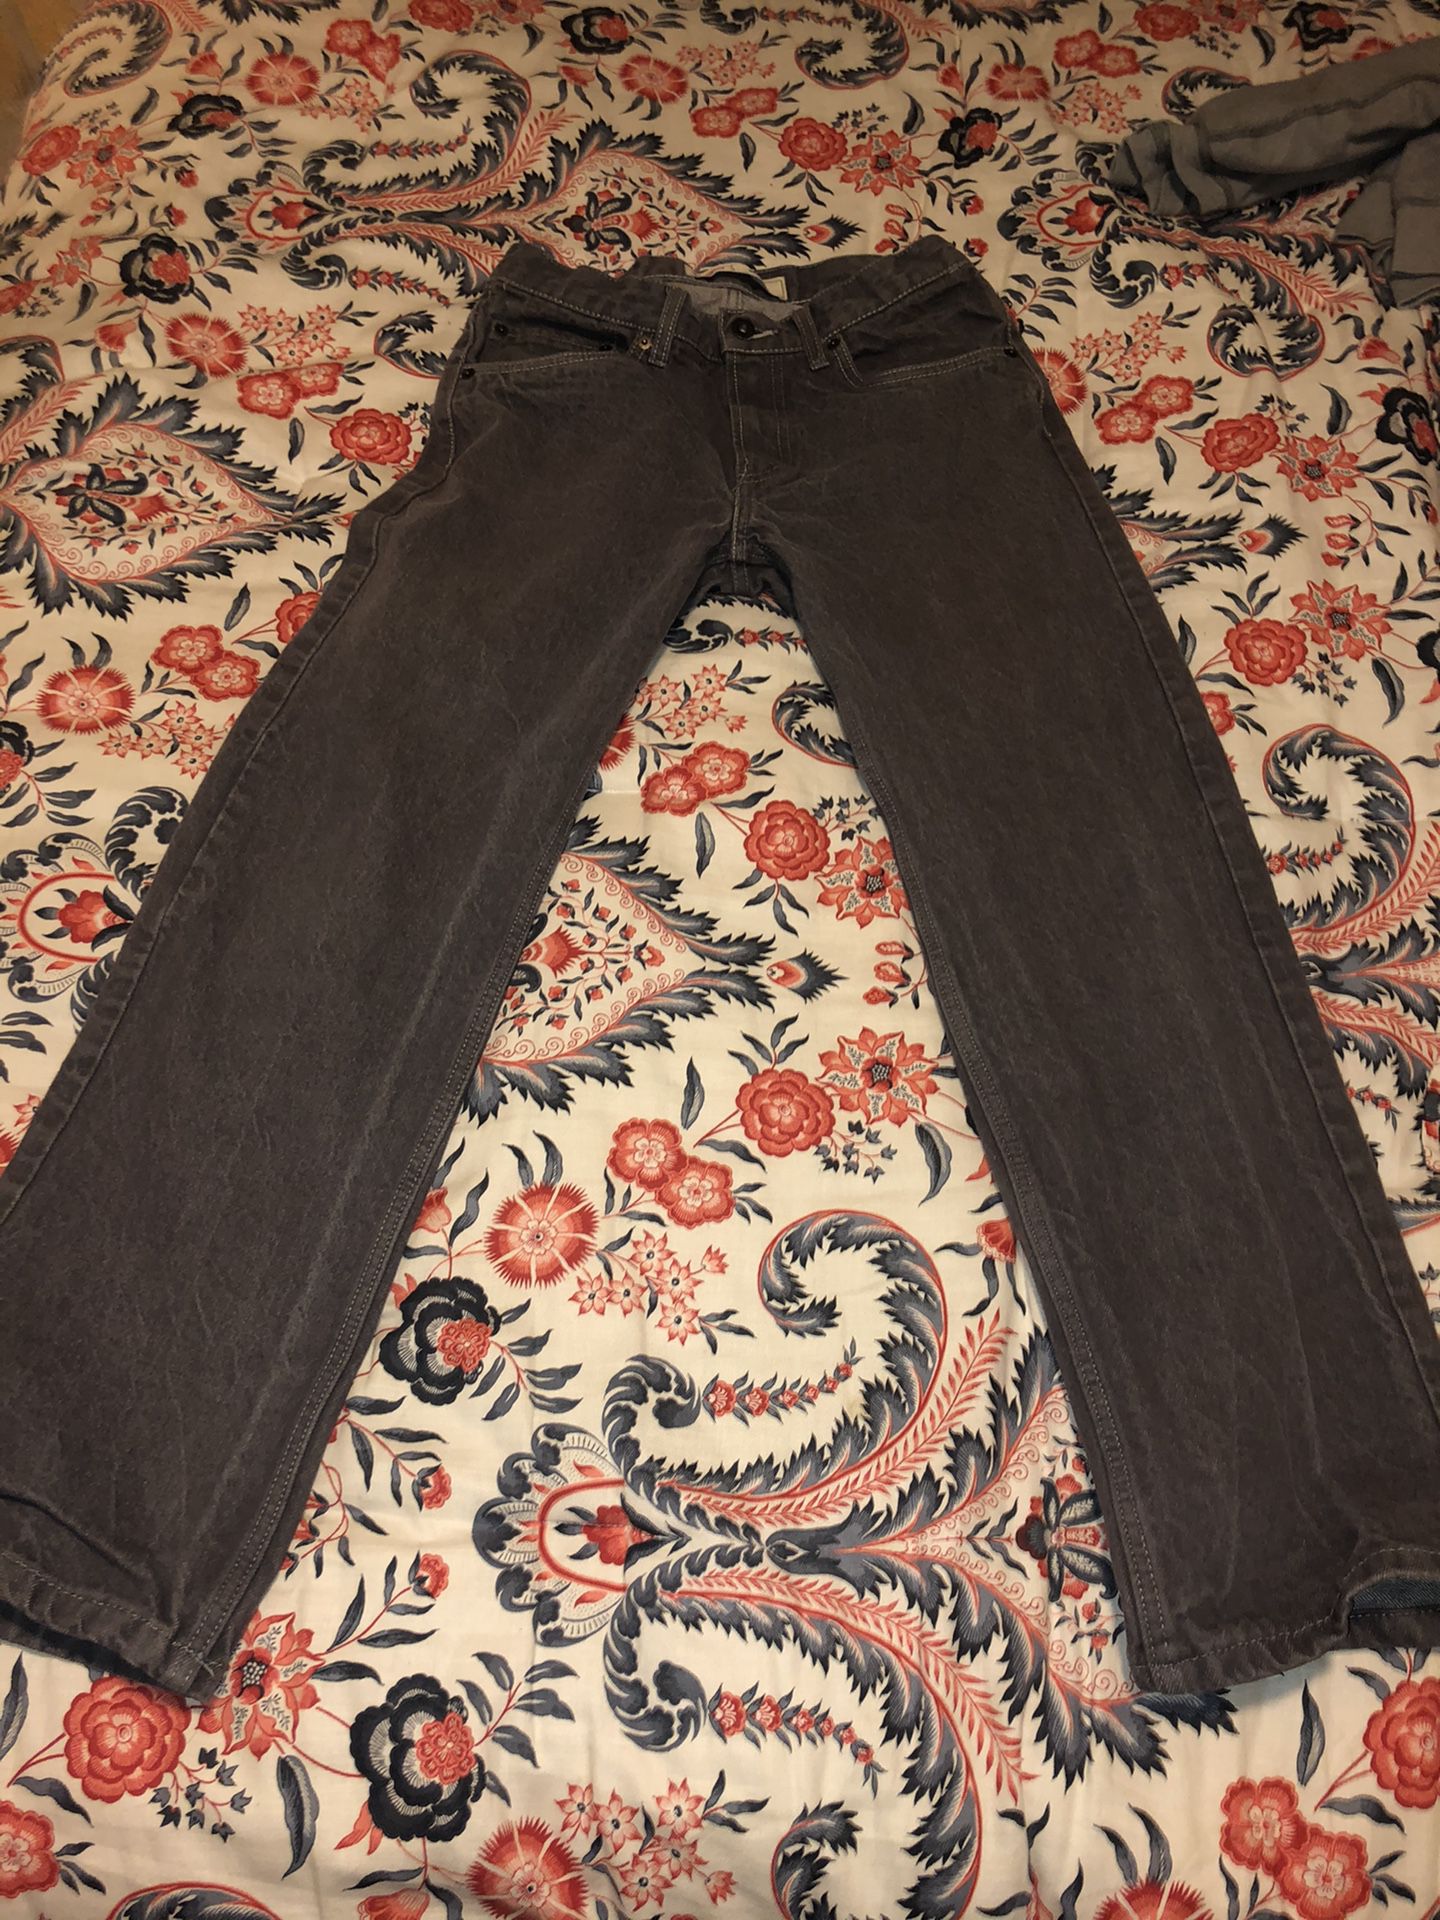 Levi Strauss kids jeans size 18 reg/ 29w 29l